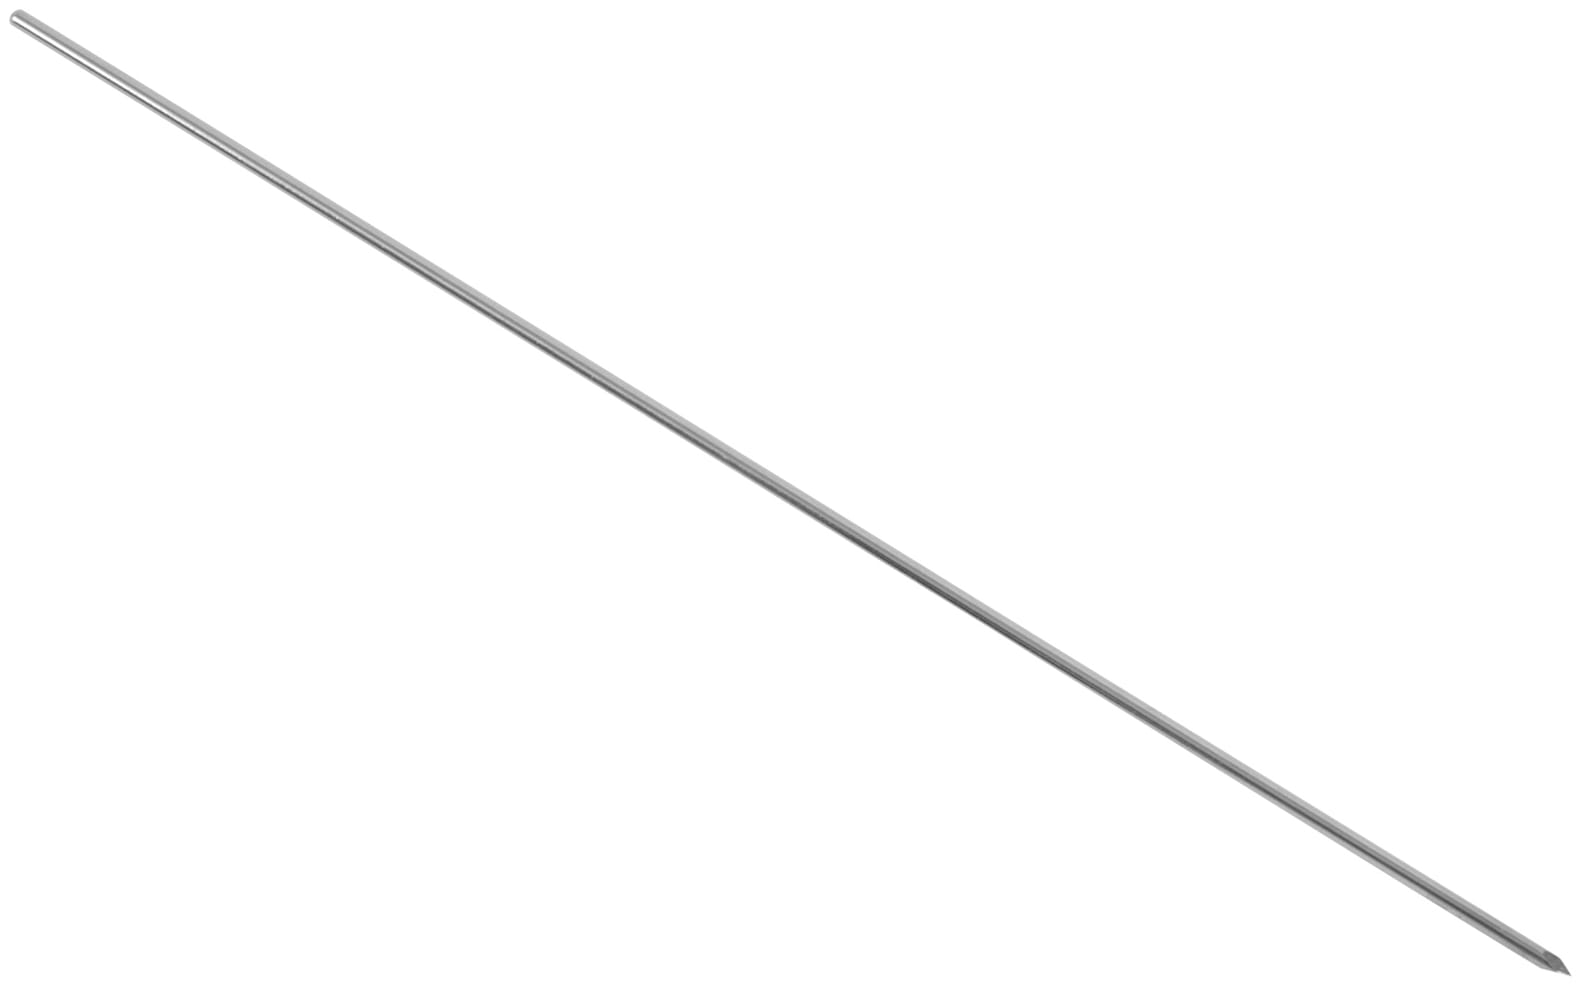 K-Wire, 1.6 mm diameter, 150 mm length